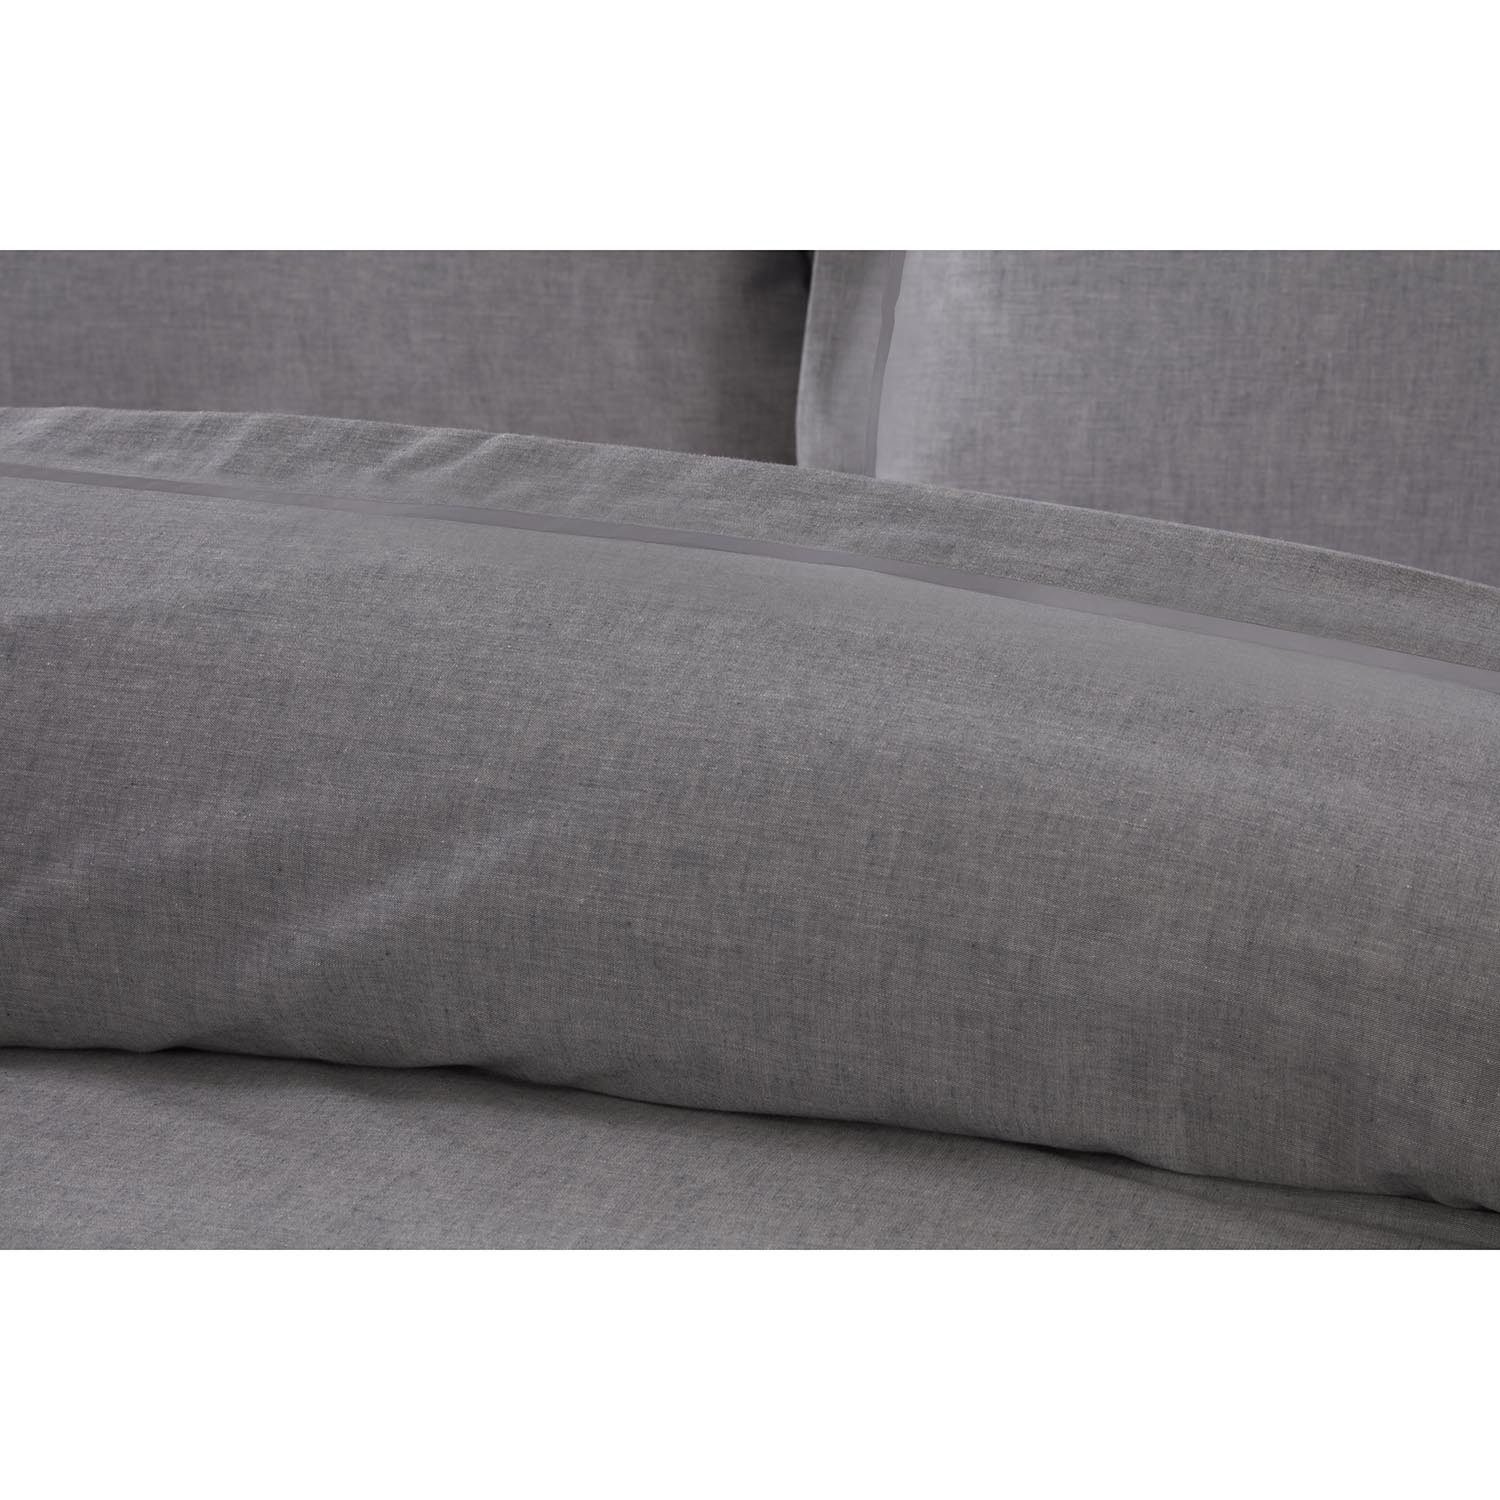 Josephine Oxford Edge Duvet Cover and Pillowcase Set - Super King size Image 4